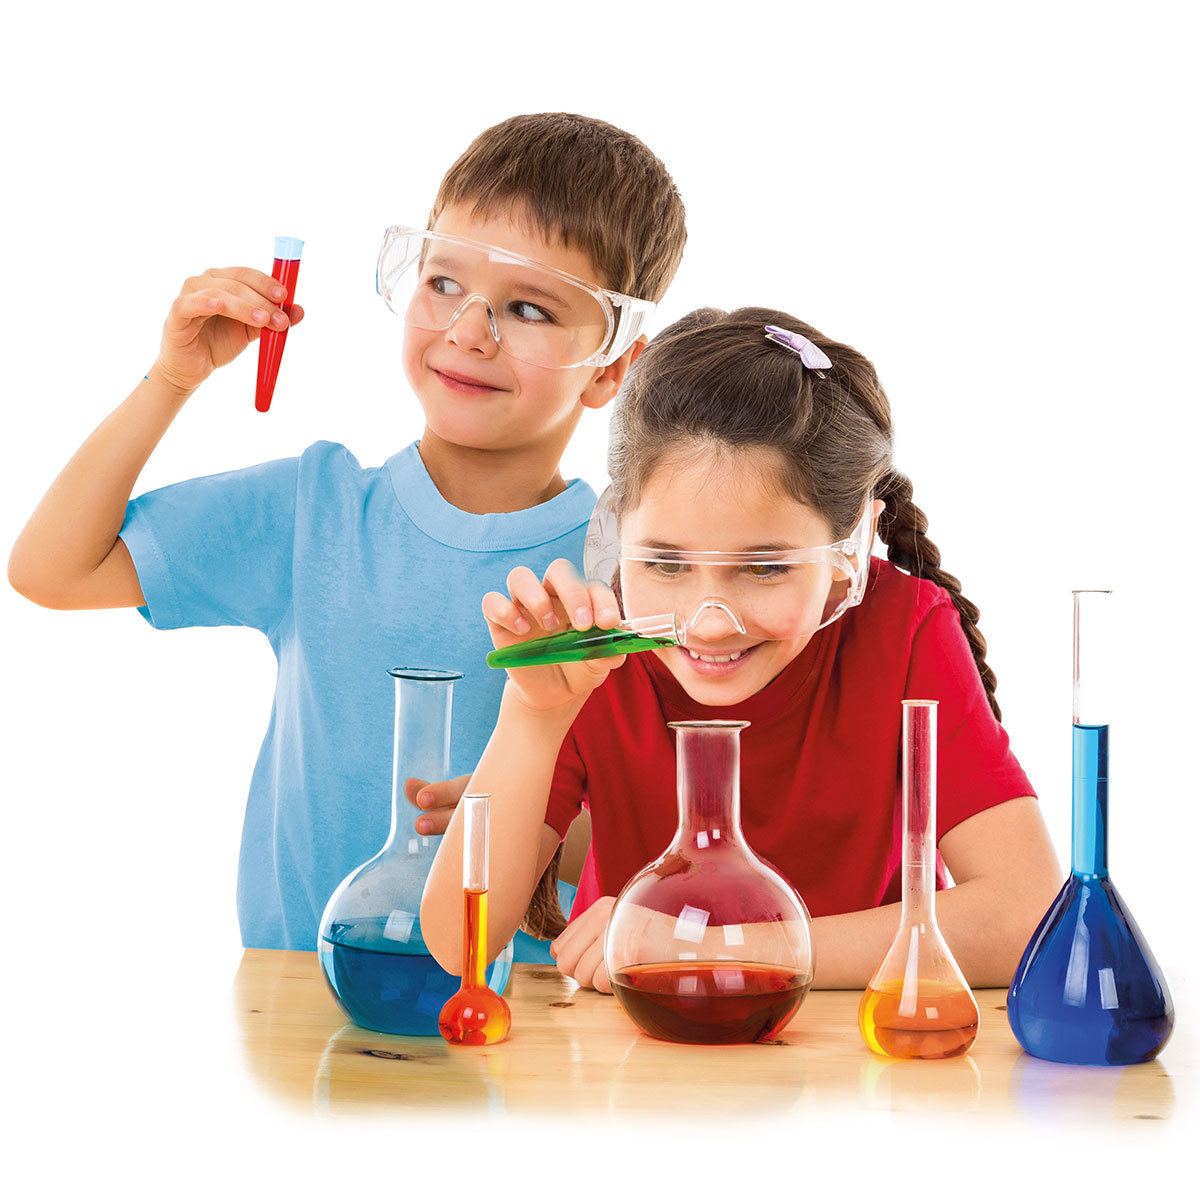 The Chemistry laboratory lifestyle image